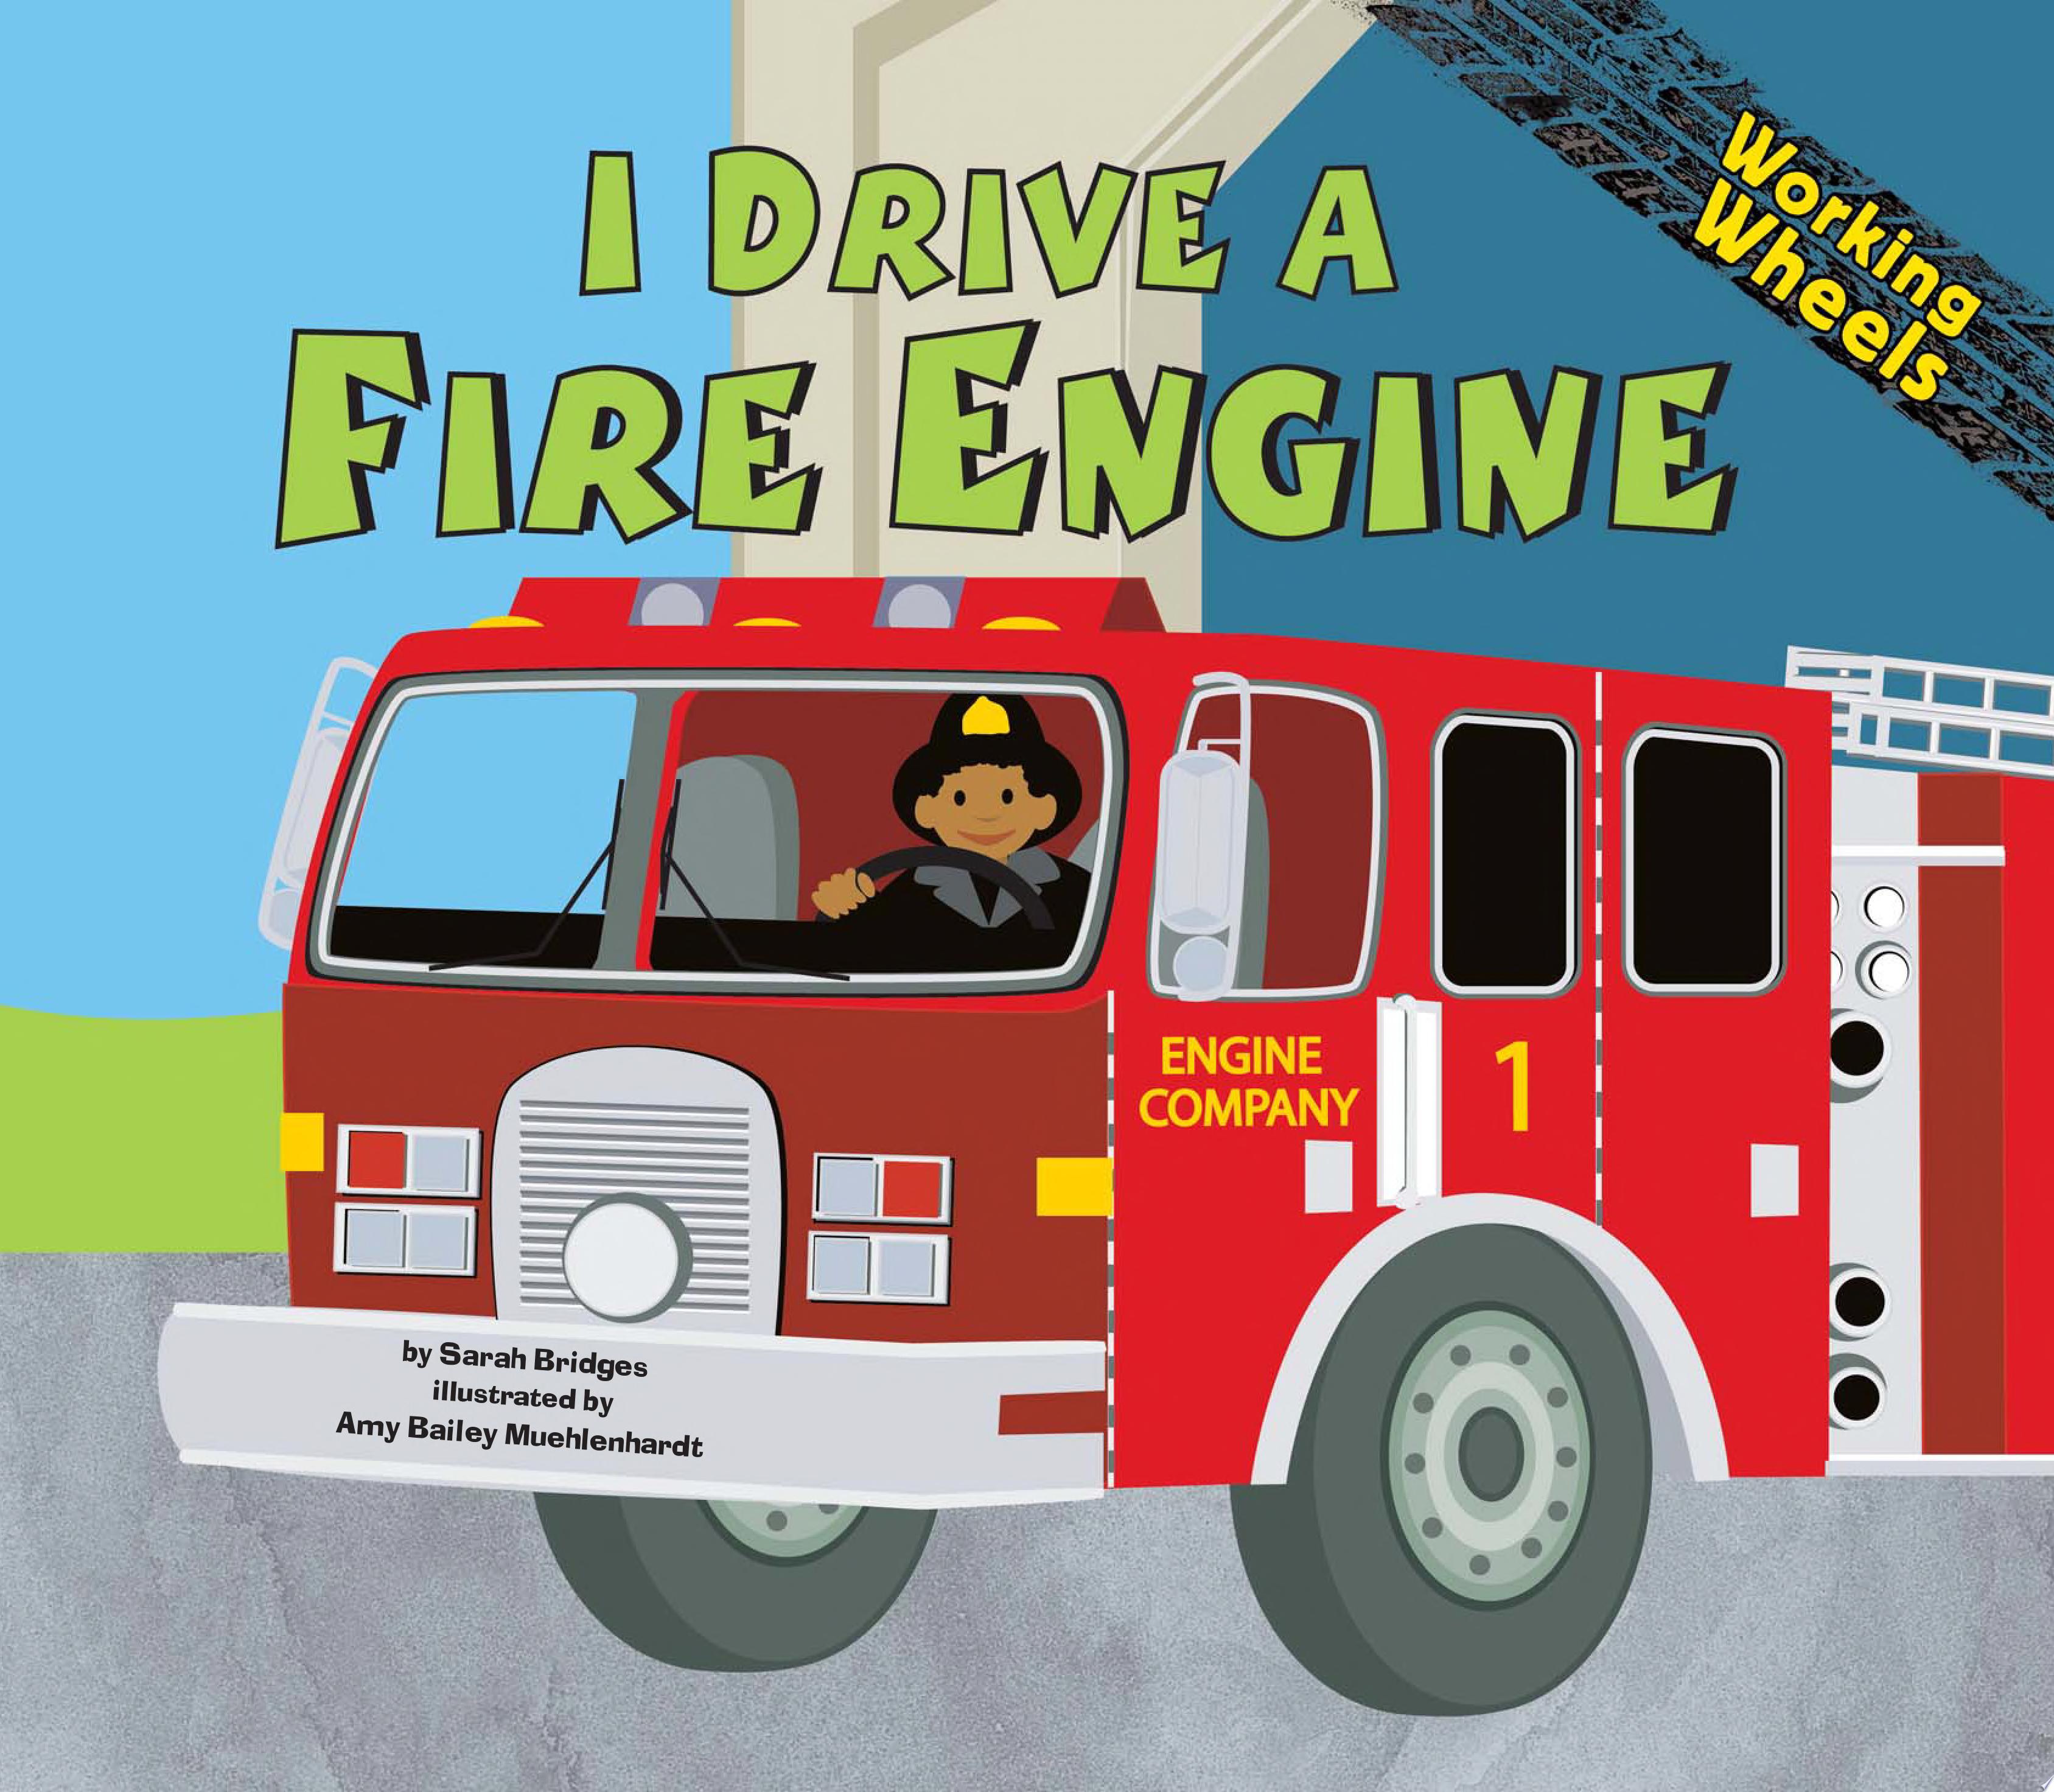 Image for "I Drive a Fire Engine"